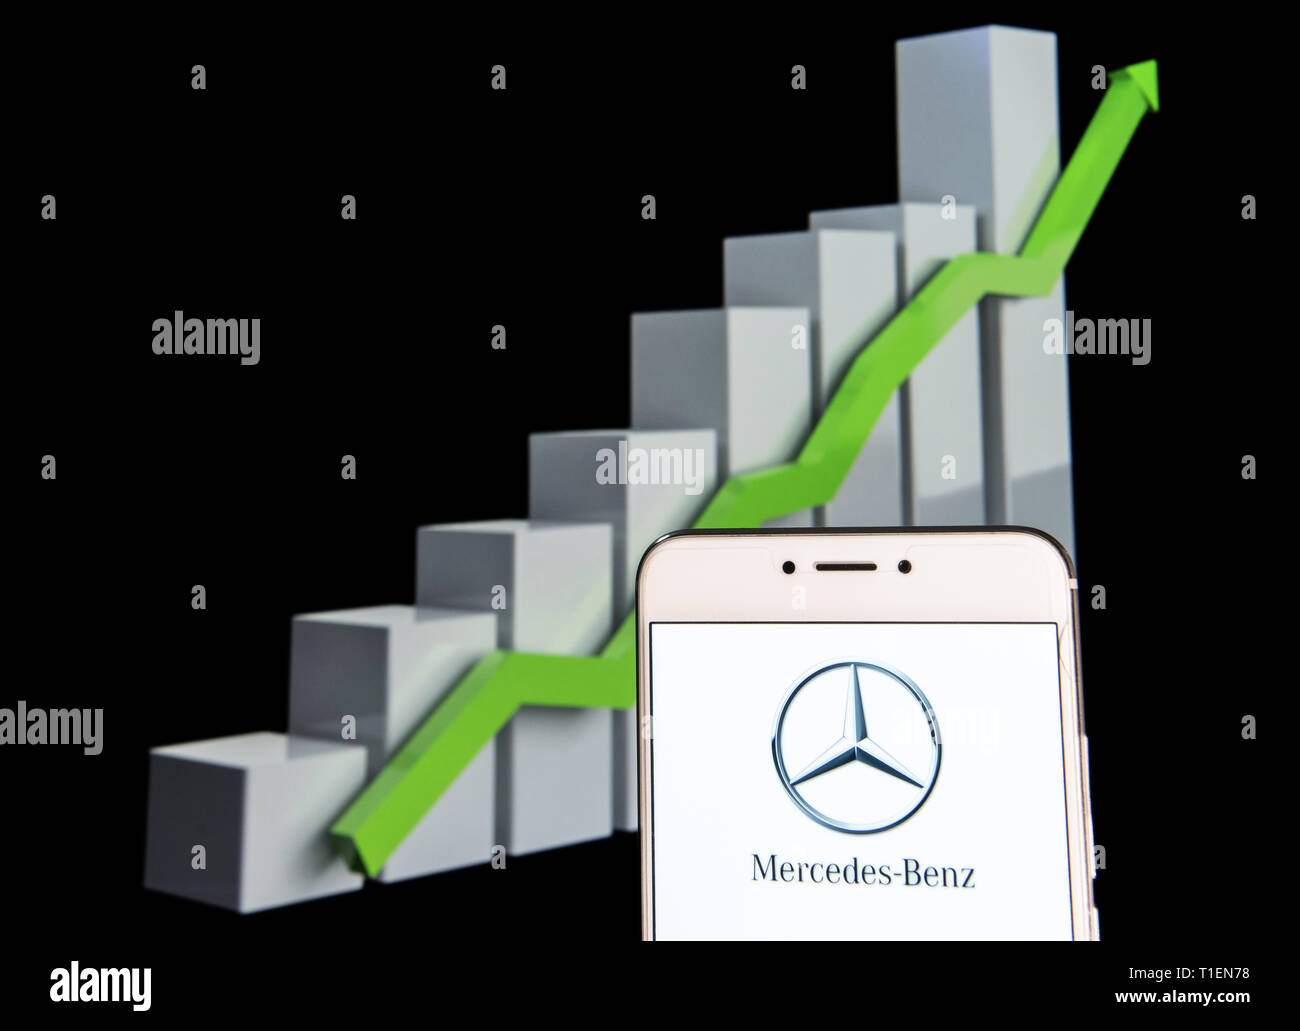 Mercedes Stock Chart